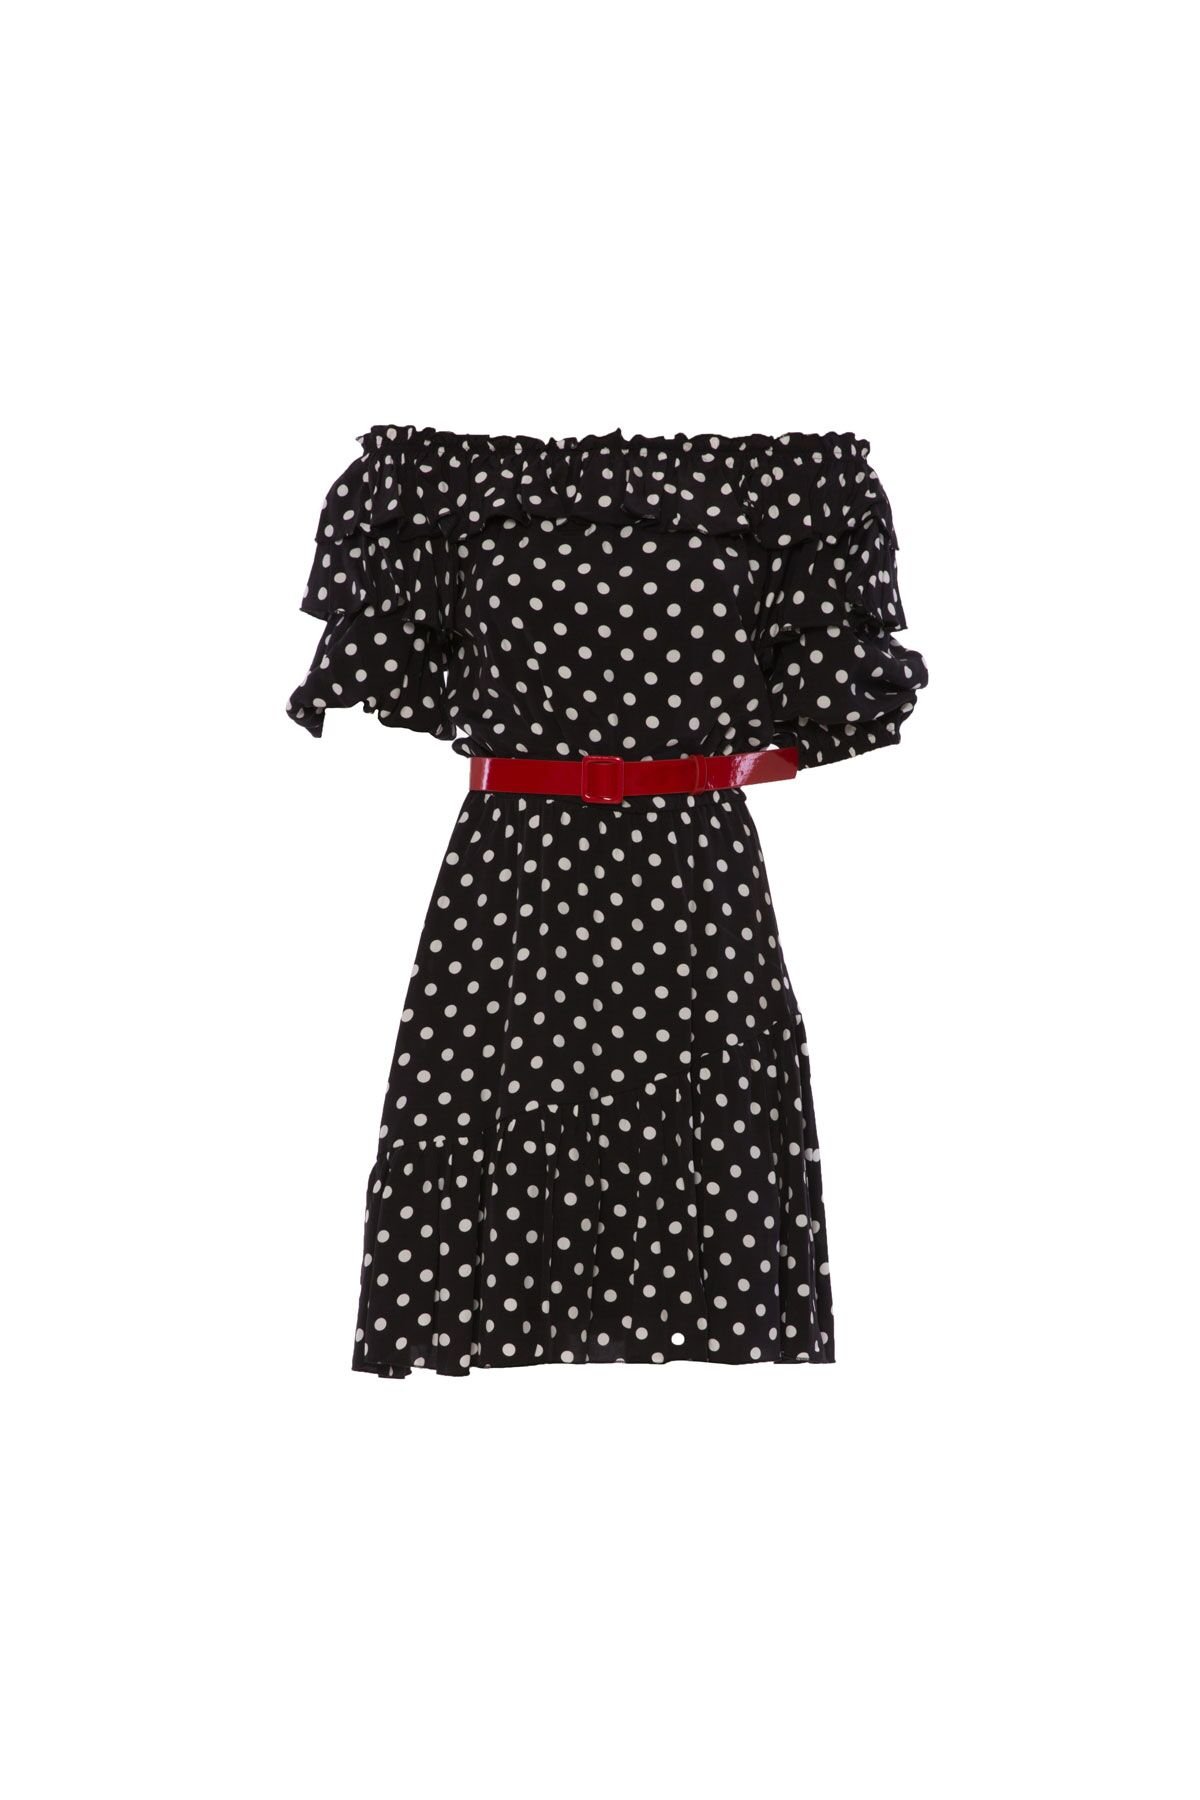 Frill Detailed Shoulder Elastic Belt Polka Dot Black Midi Dress